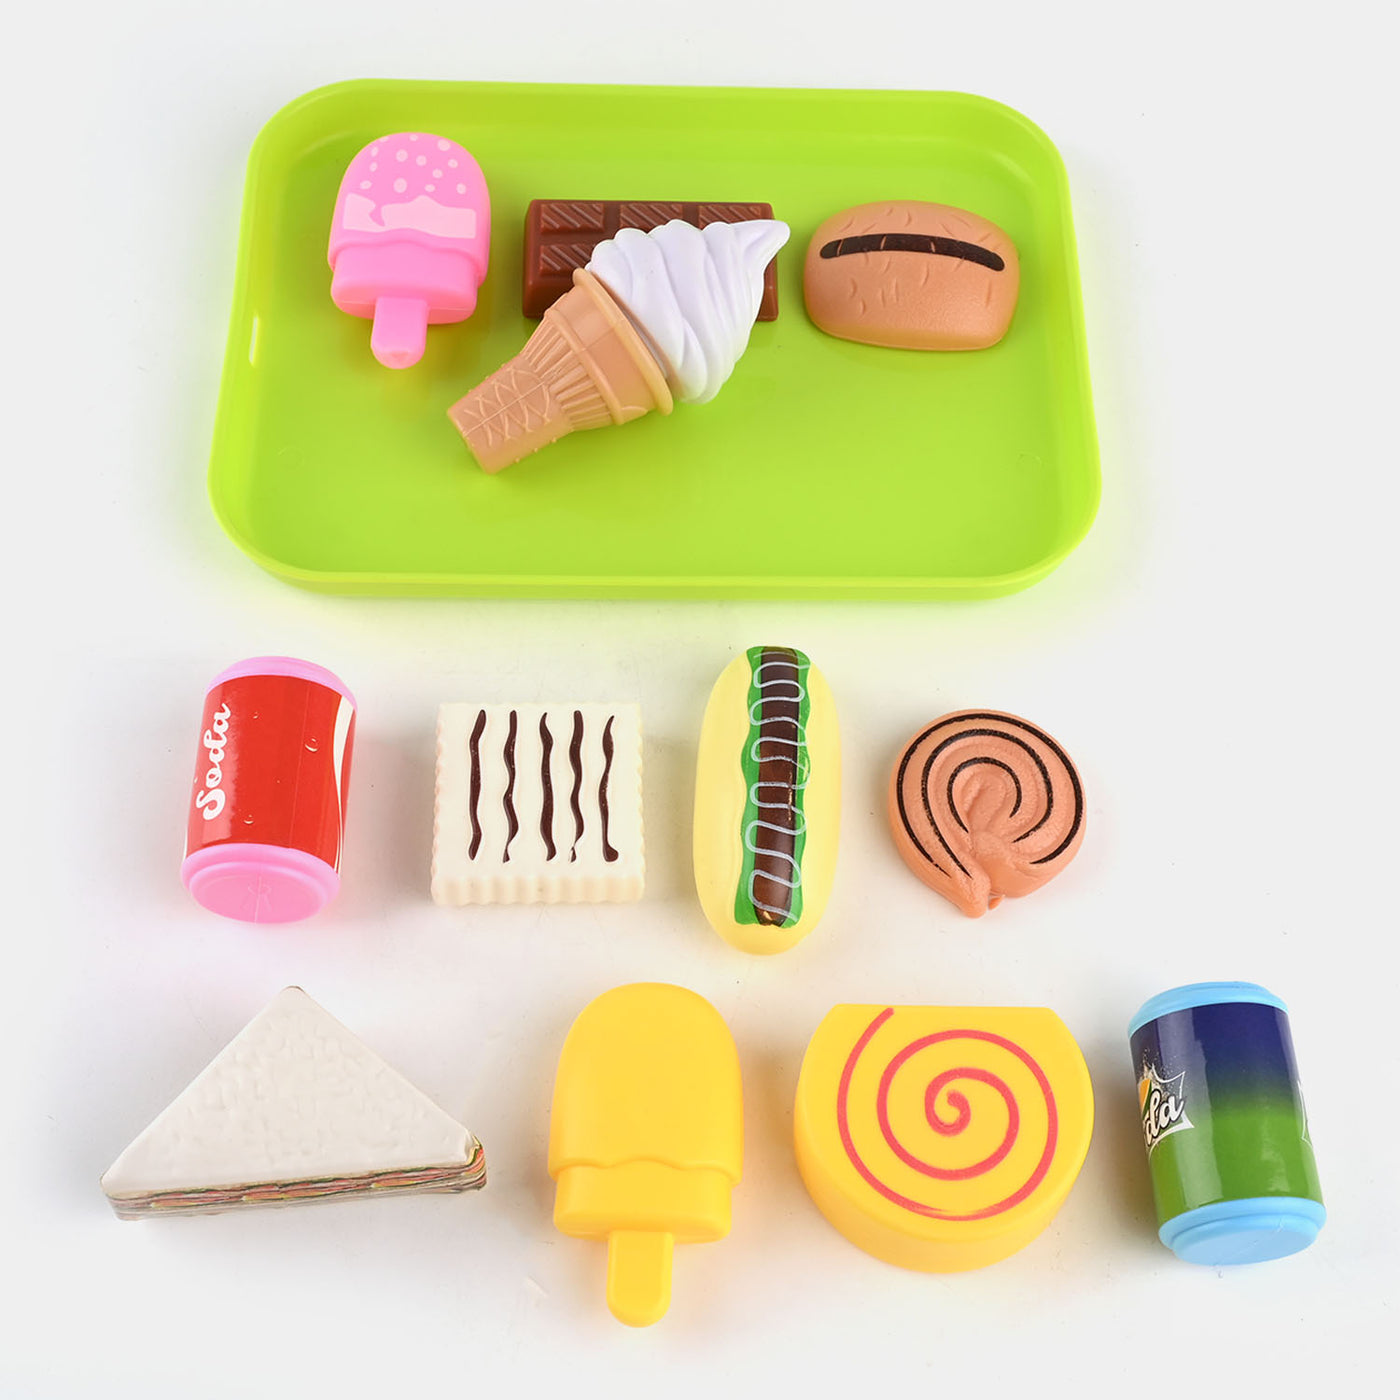 Cutting Dessert Baking Goods Toy Set For Kids